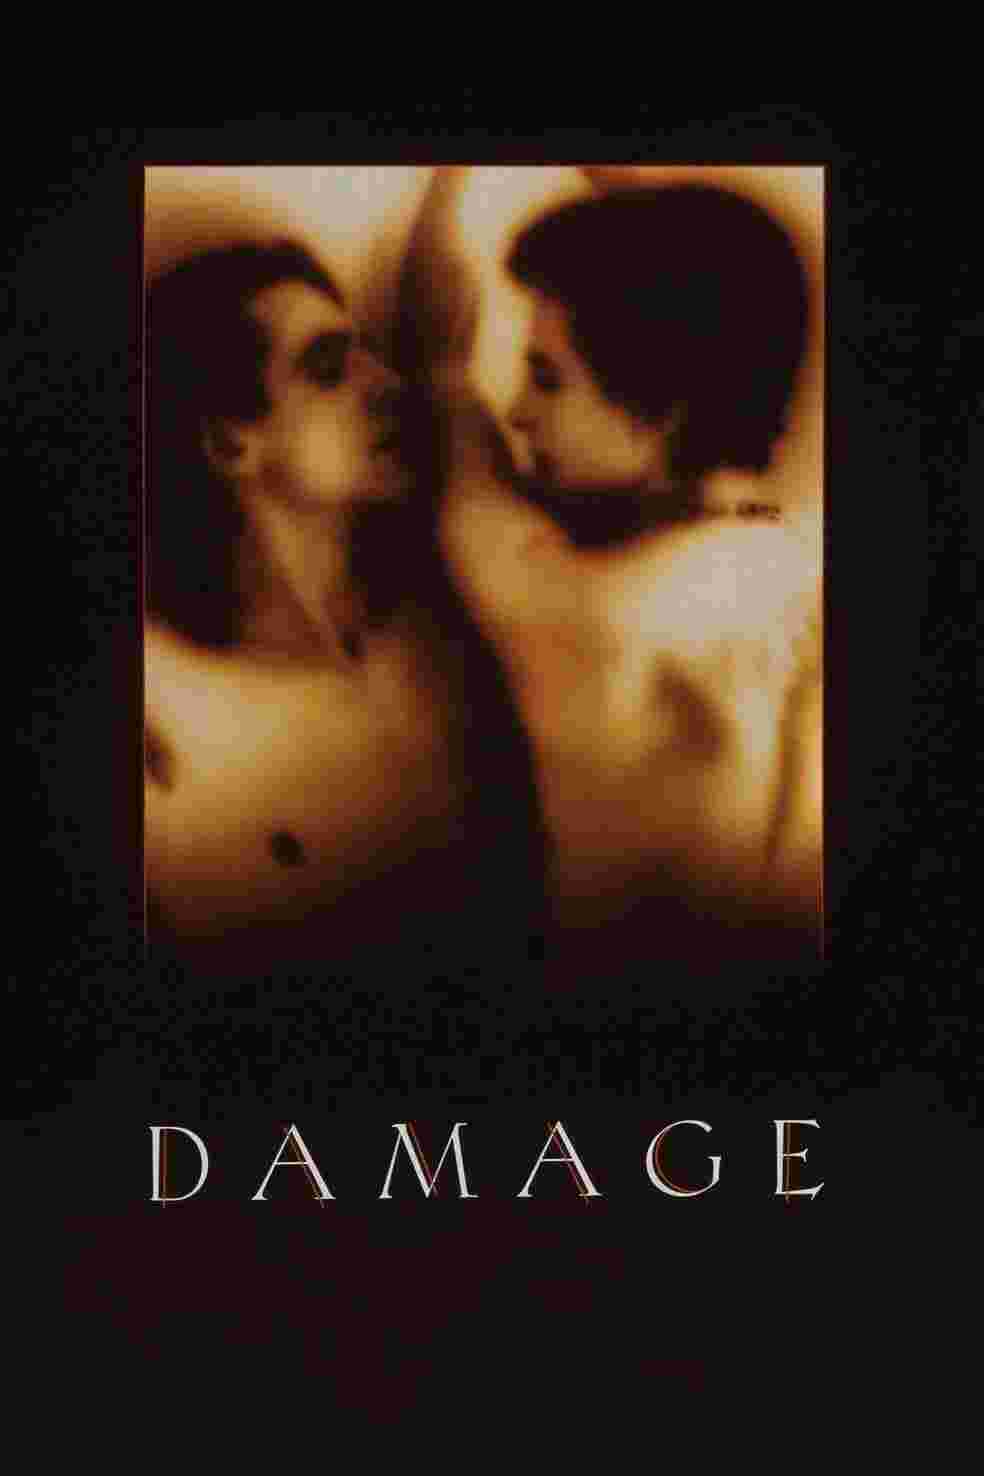 Damage (1992) Jeremy Irons